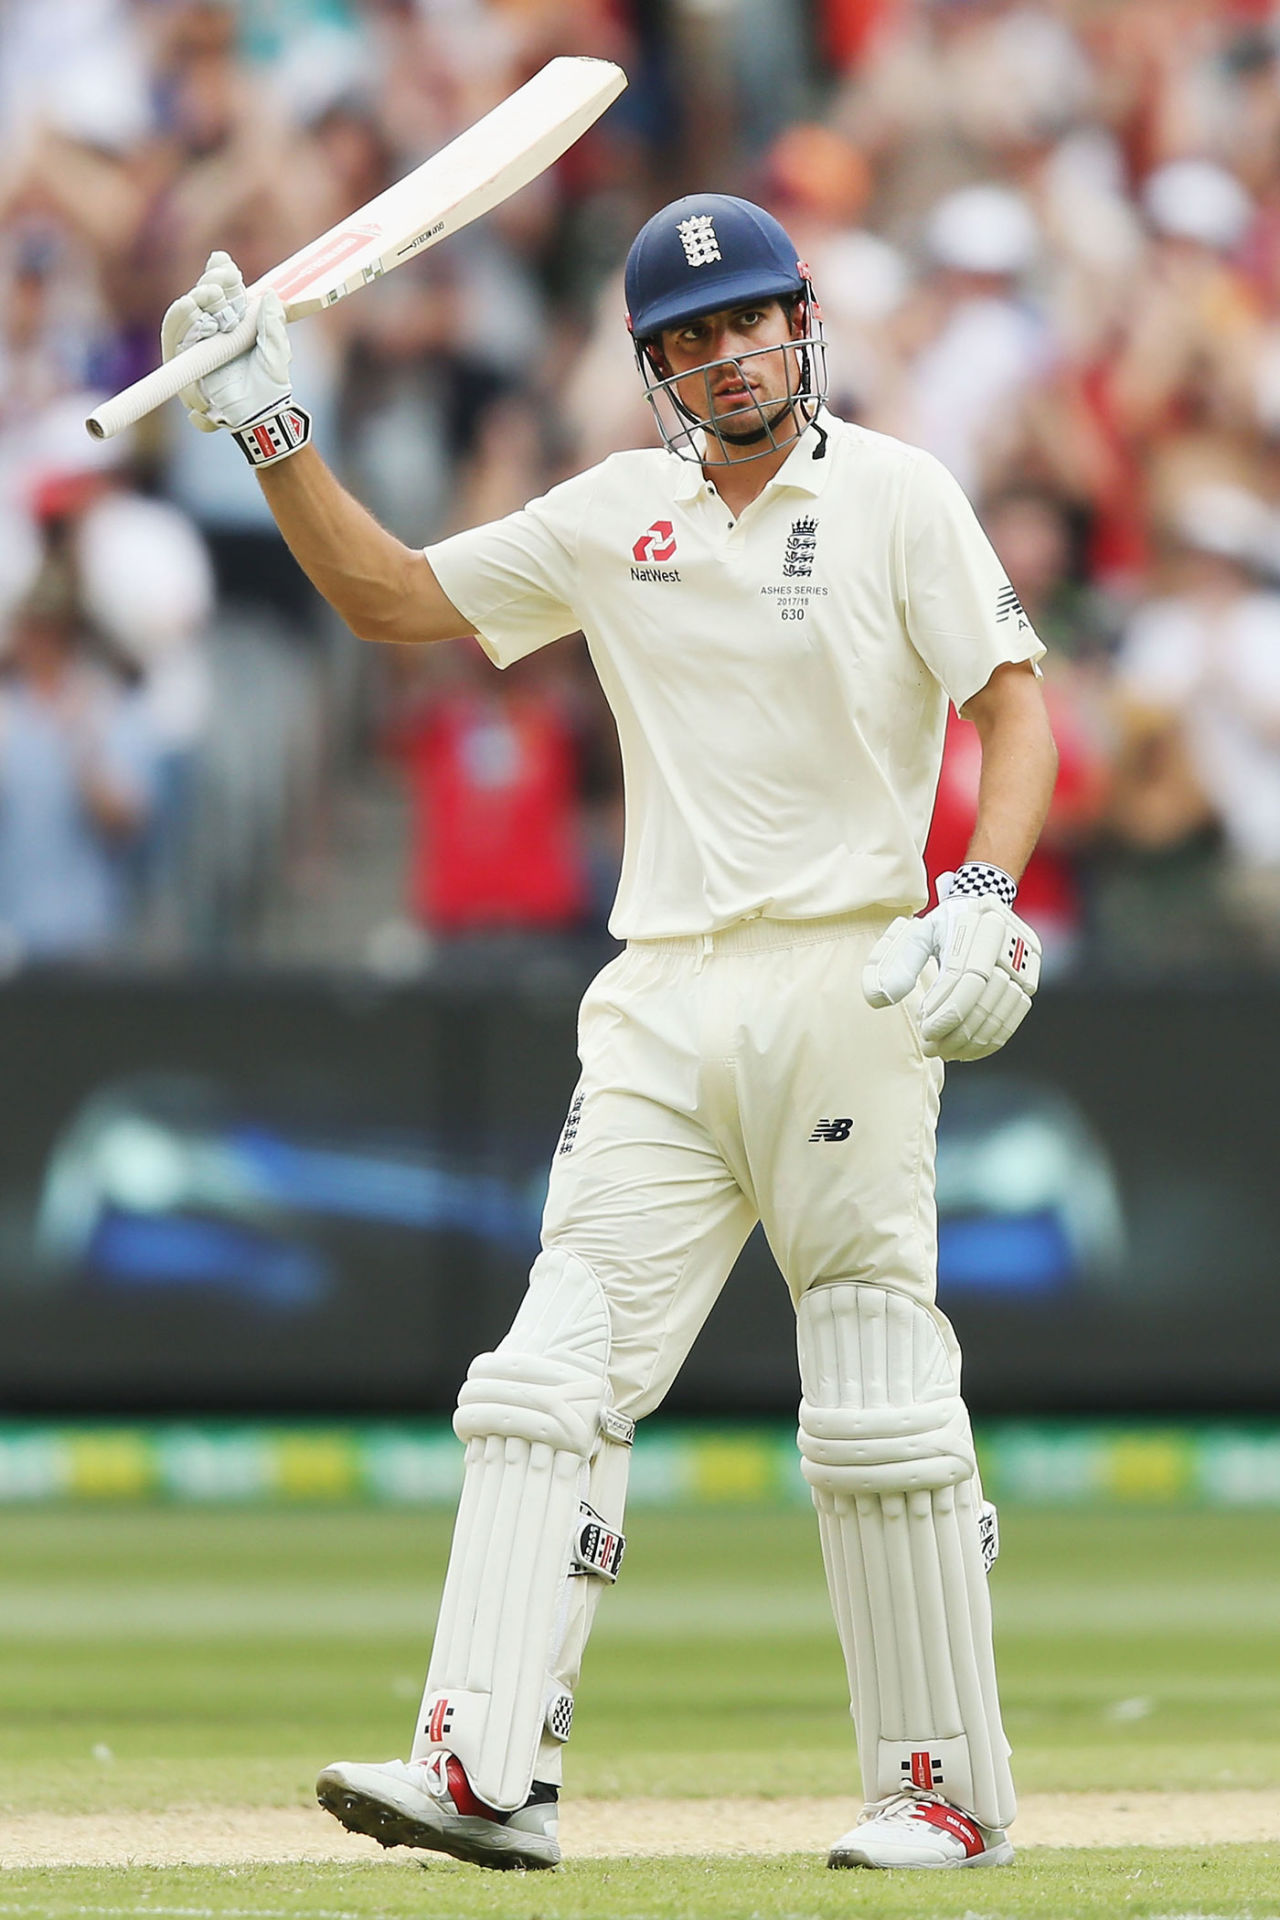 Alastair Cook raises his bat for 150, Australia v England, 4th Ashes Test, Melbourne, 3rd day, December 28, 2017